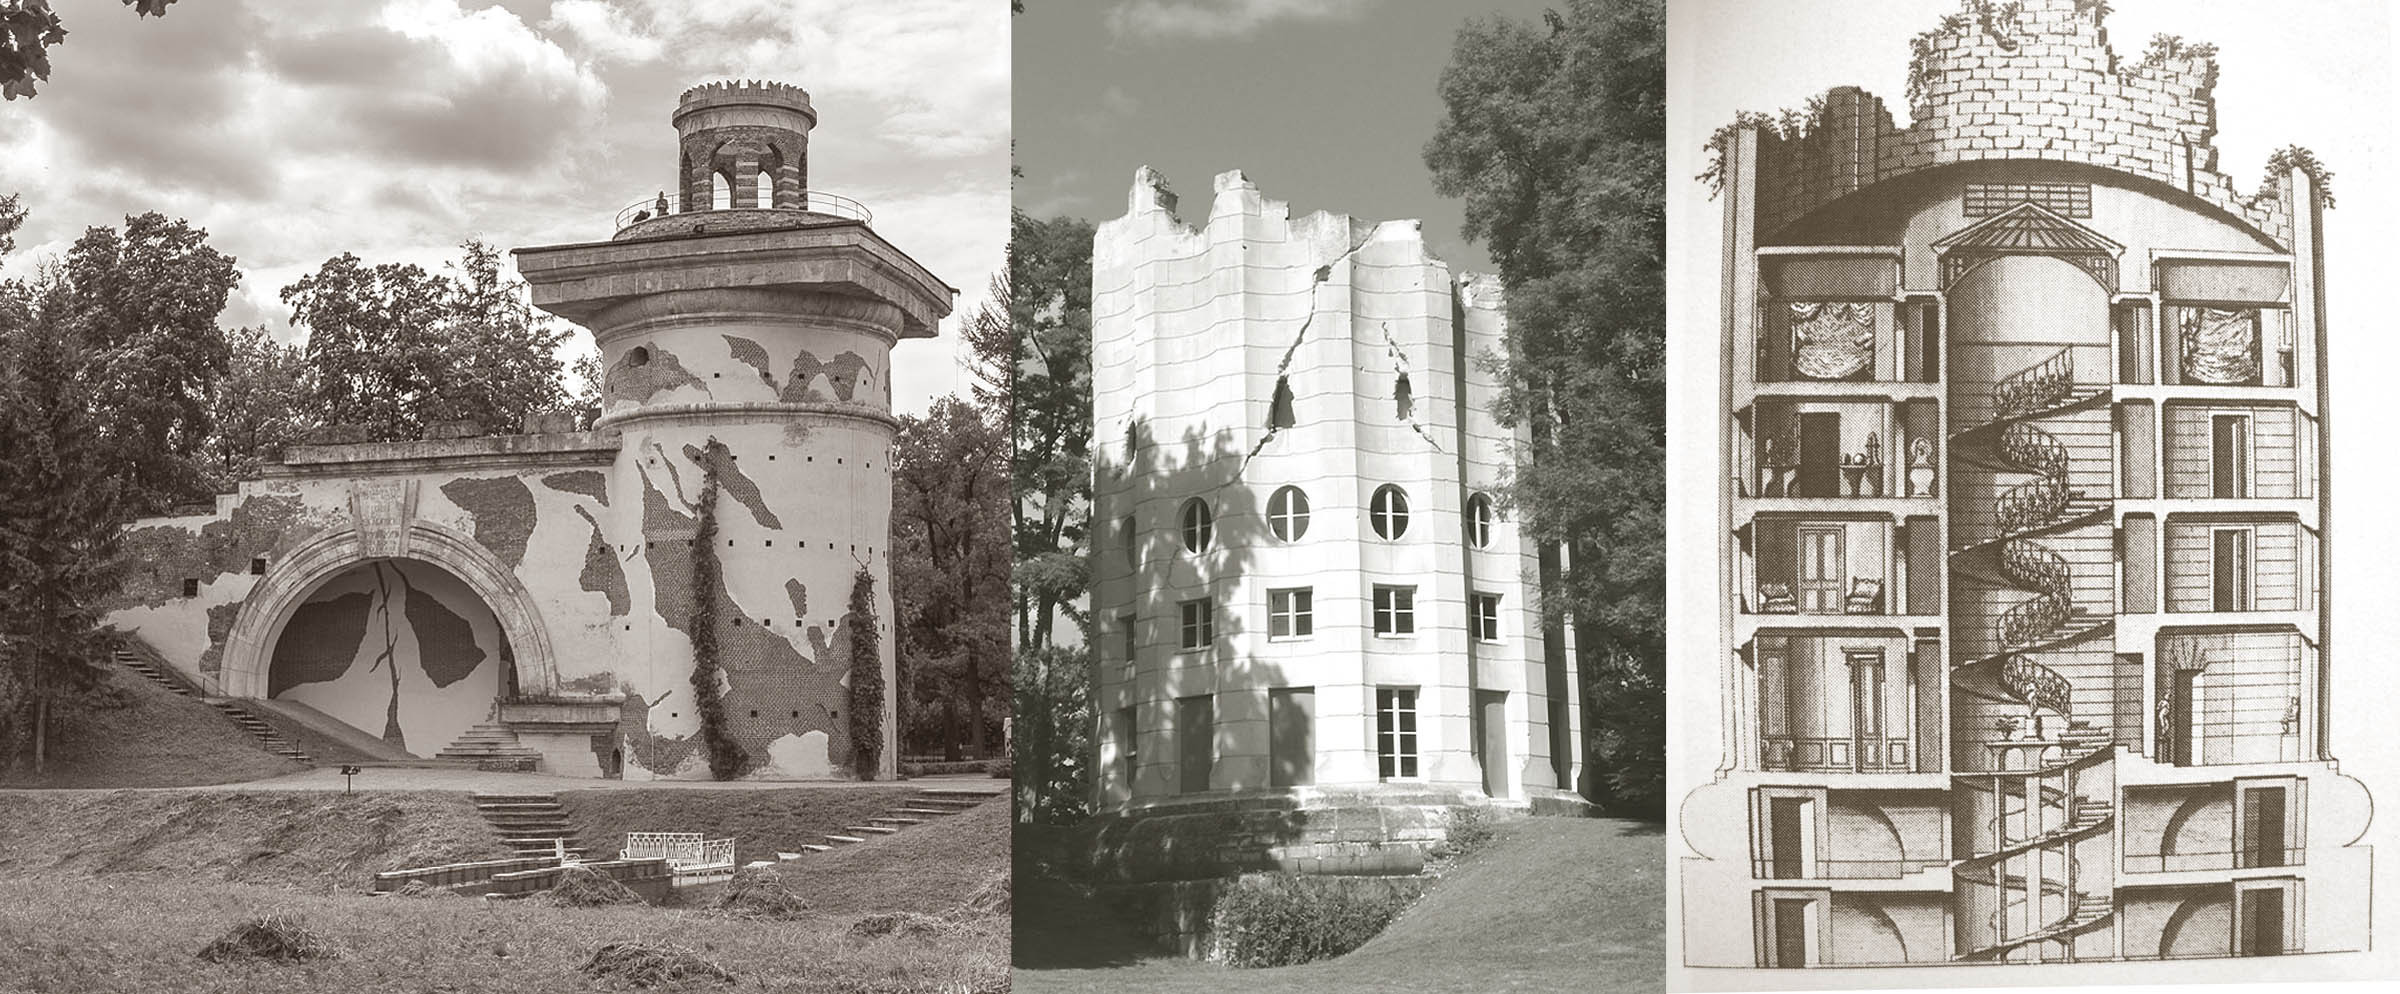 Слева&nbsp;— Ю. Фельтен, Башня-руина в&nbsp;Царском селе; в&nbsp;центре и&nbsp;справа&nbsp;— «Разрушенная колонна», парк Дезер де Ретц, Шамбурси.